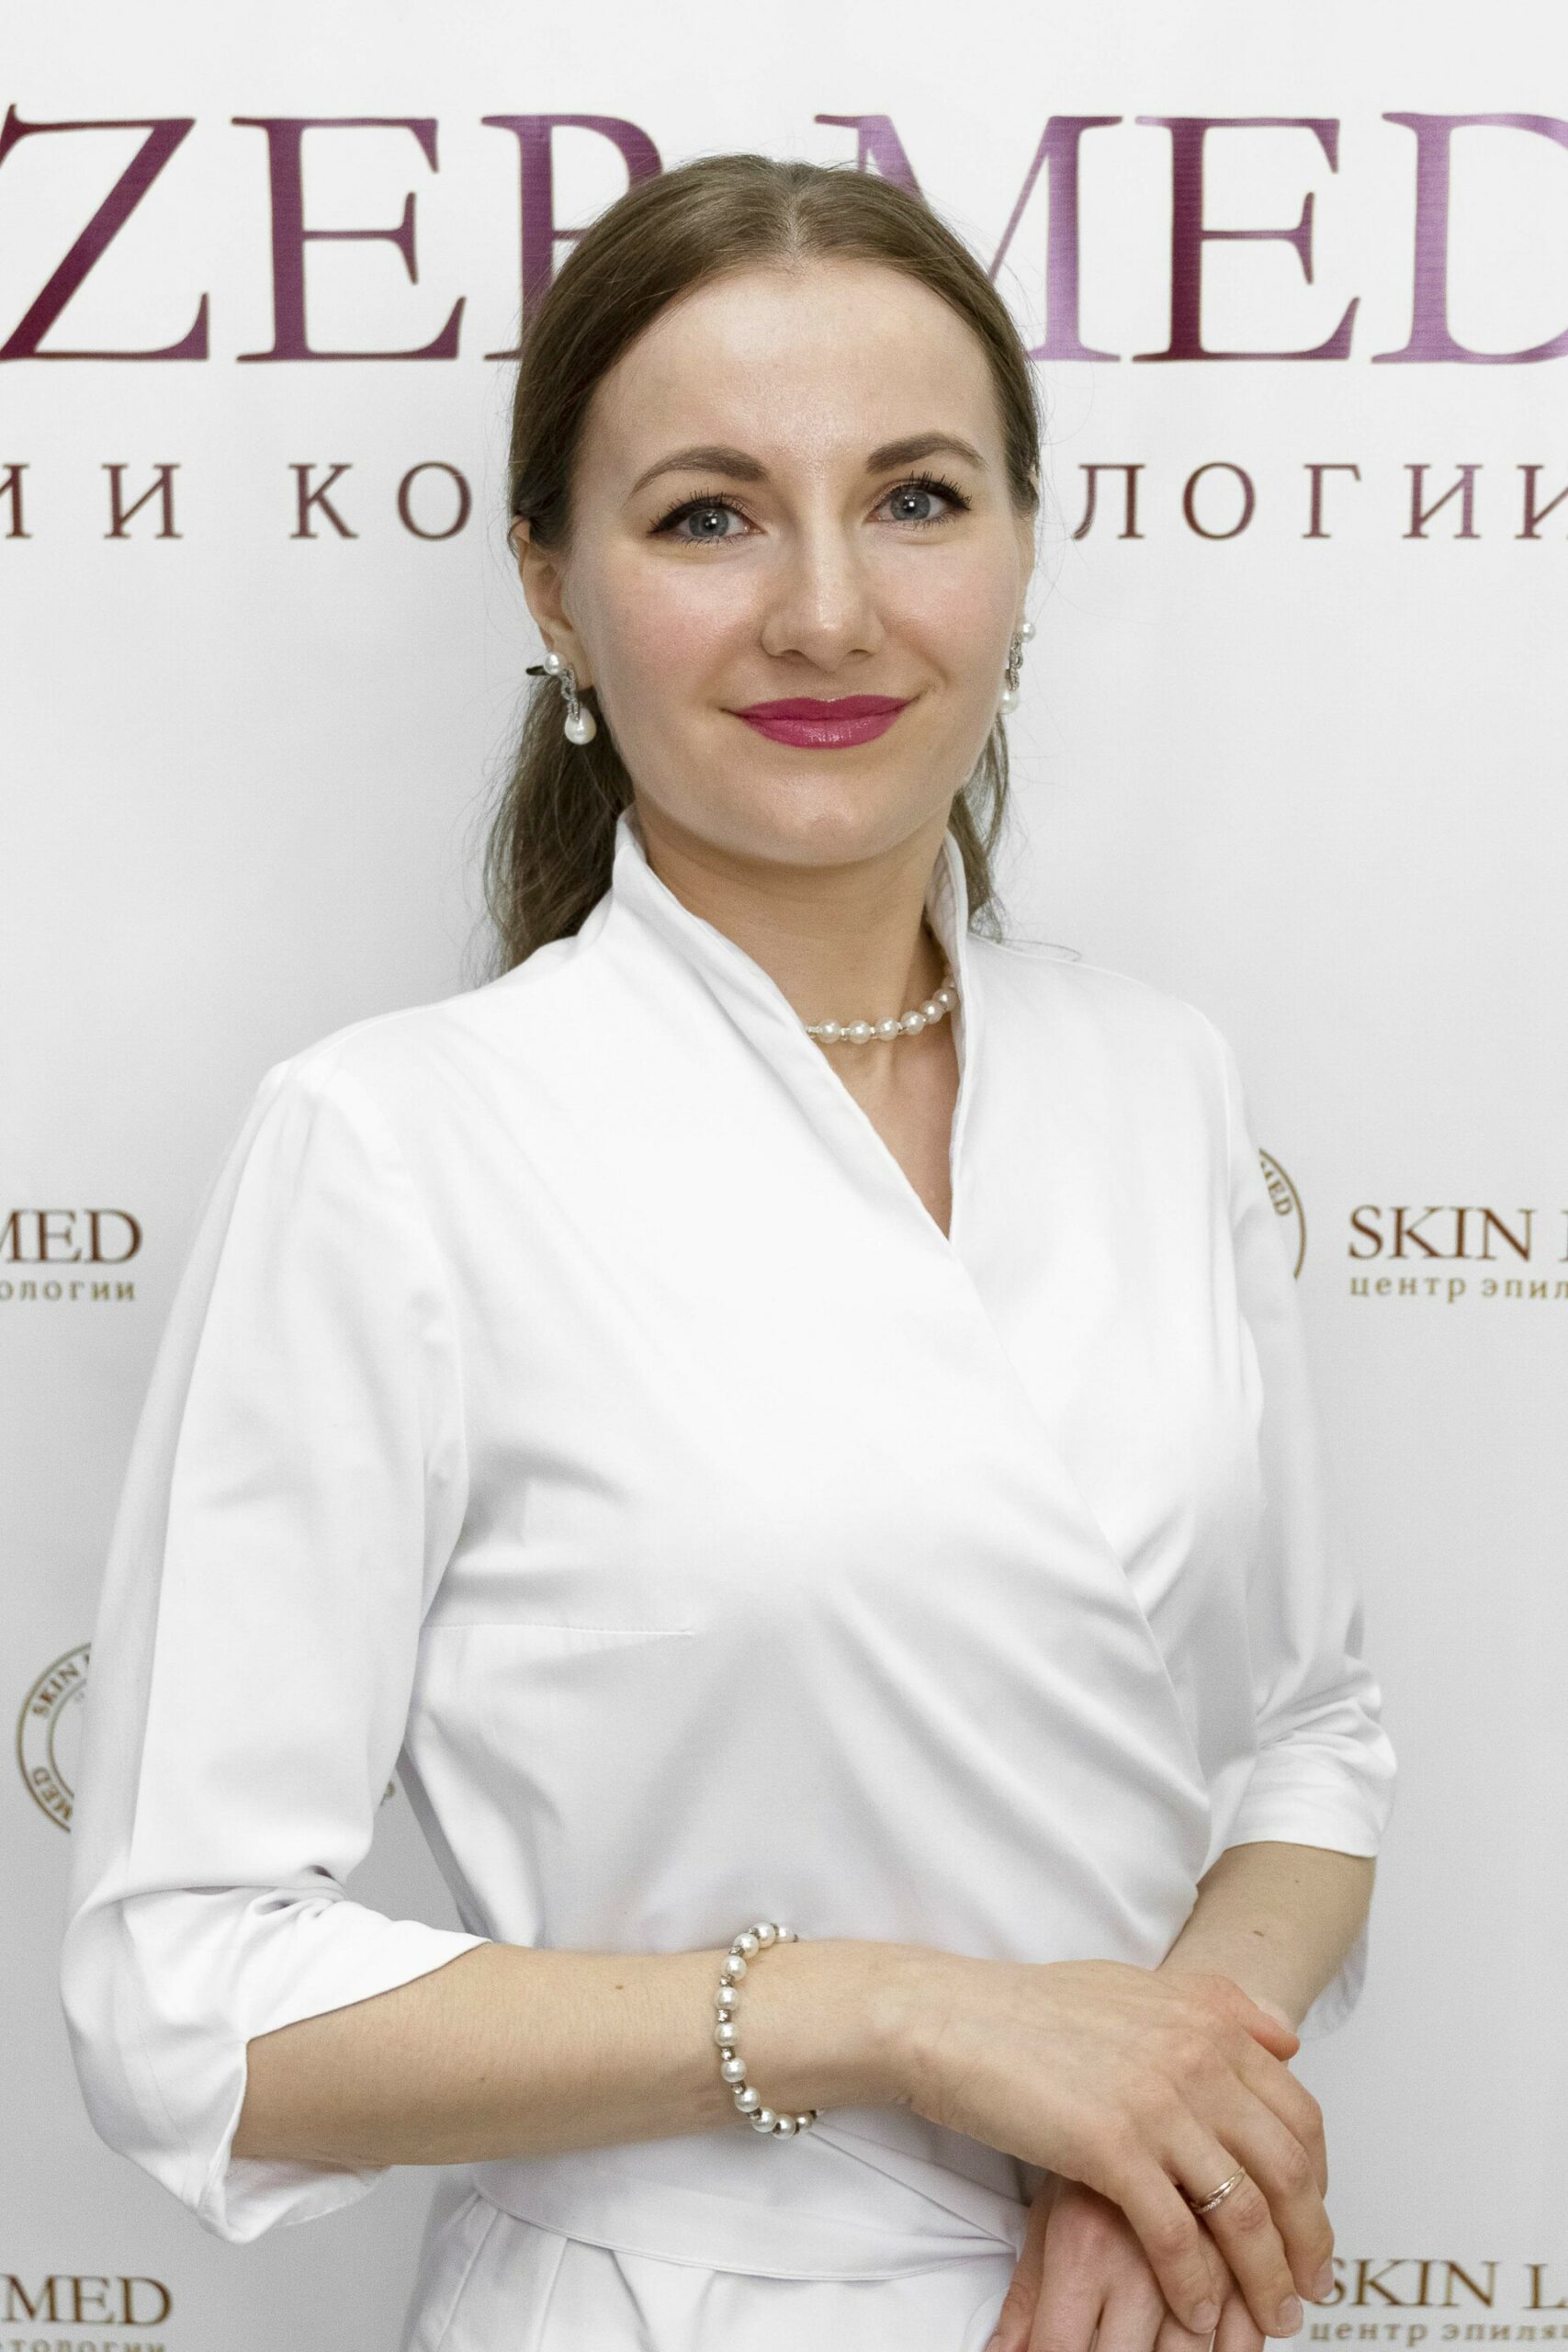 Иванчик Анжелика Андреевна, врач-косметолог, дерматовенеролог